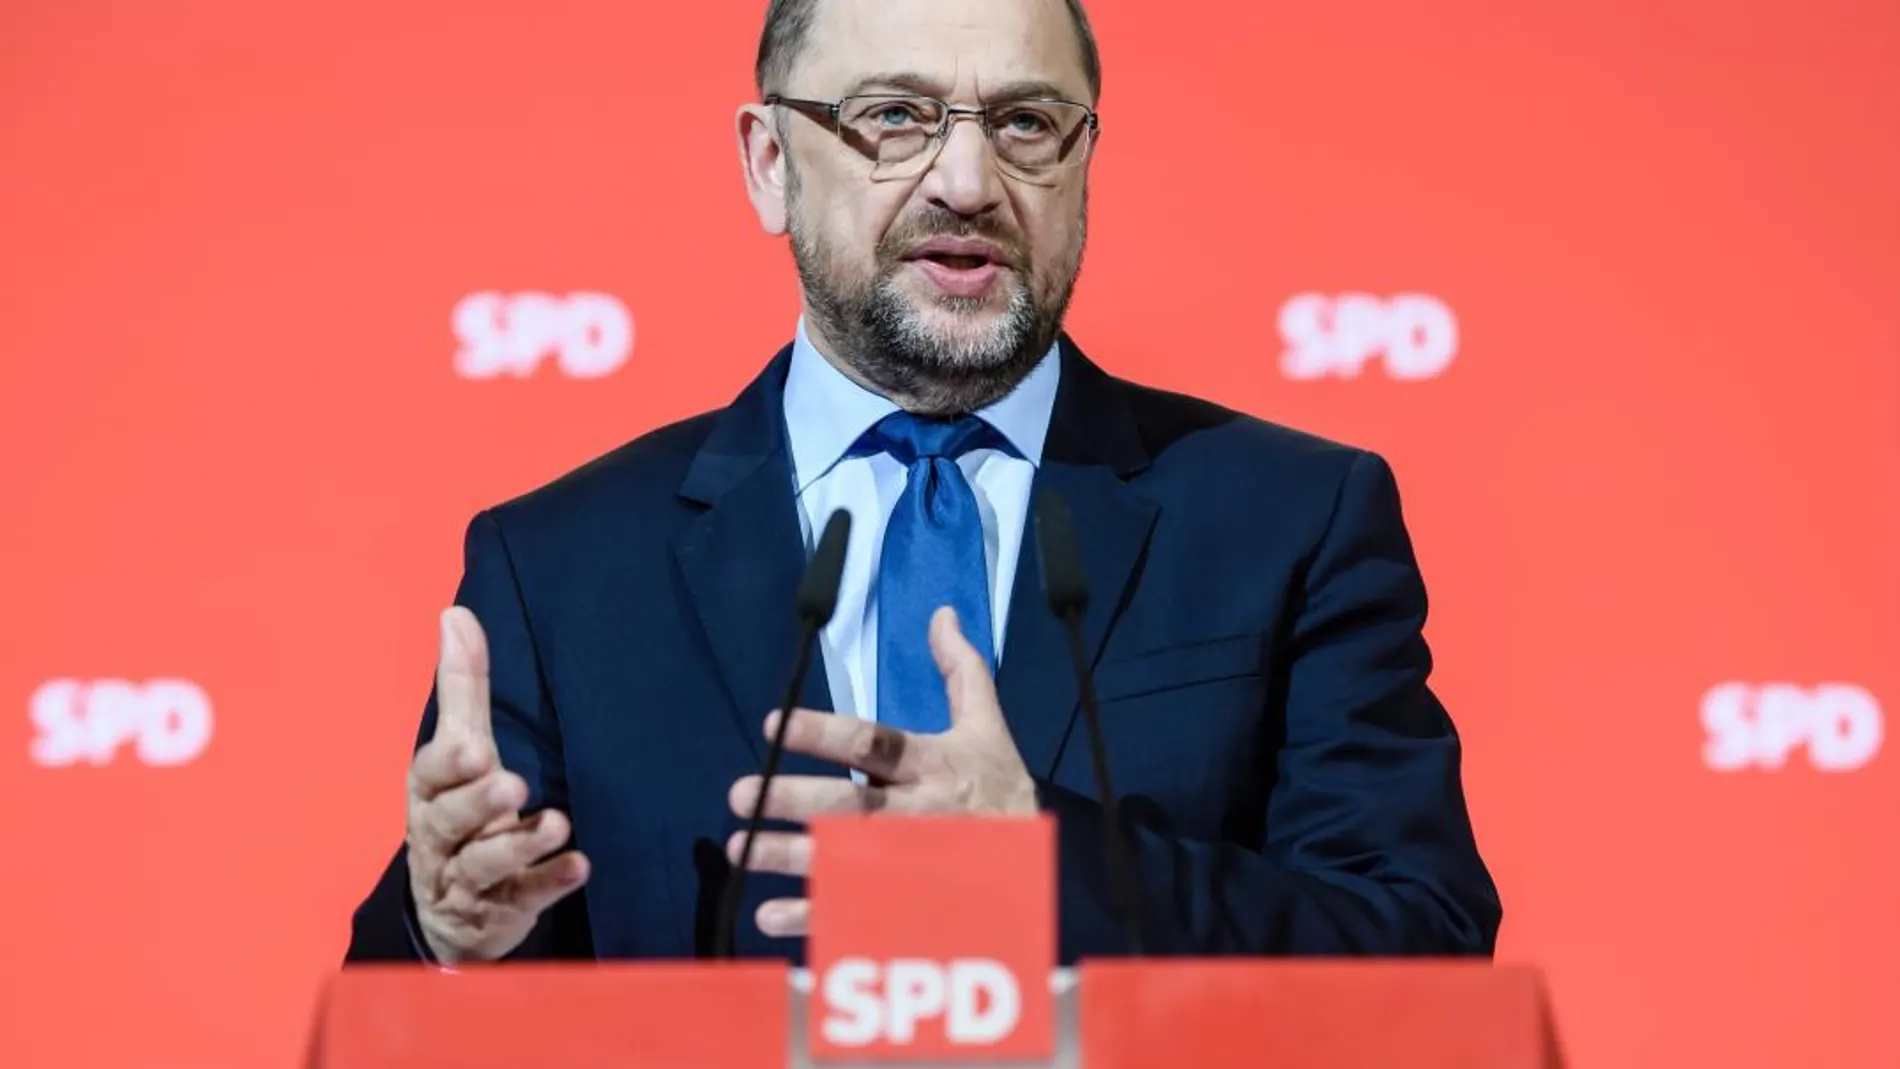 El líder del Partido Socialdemócrata (SPD), Martin Schulz